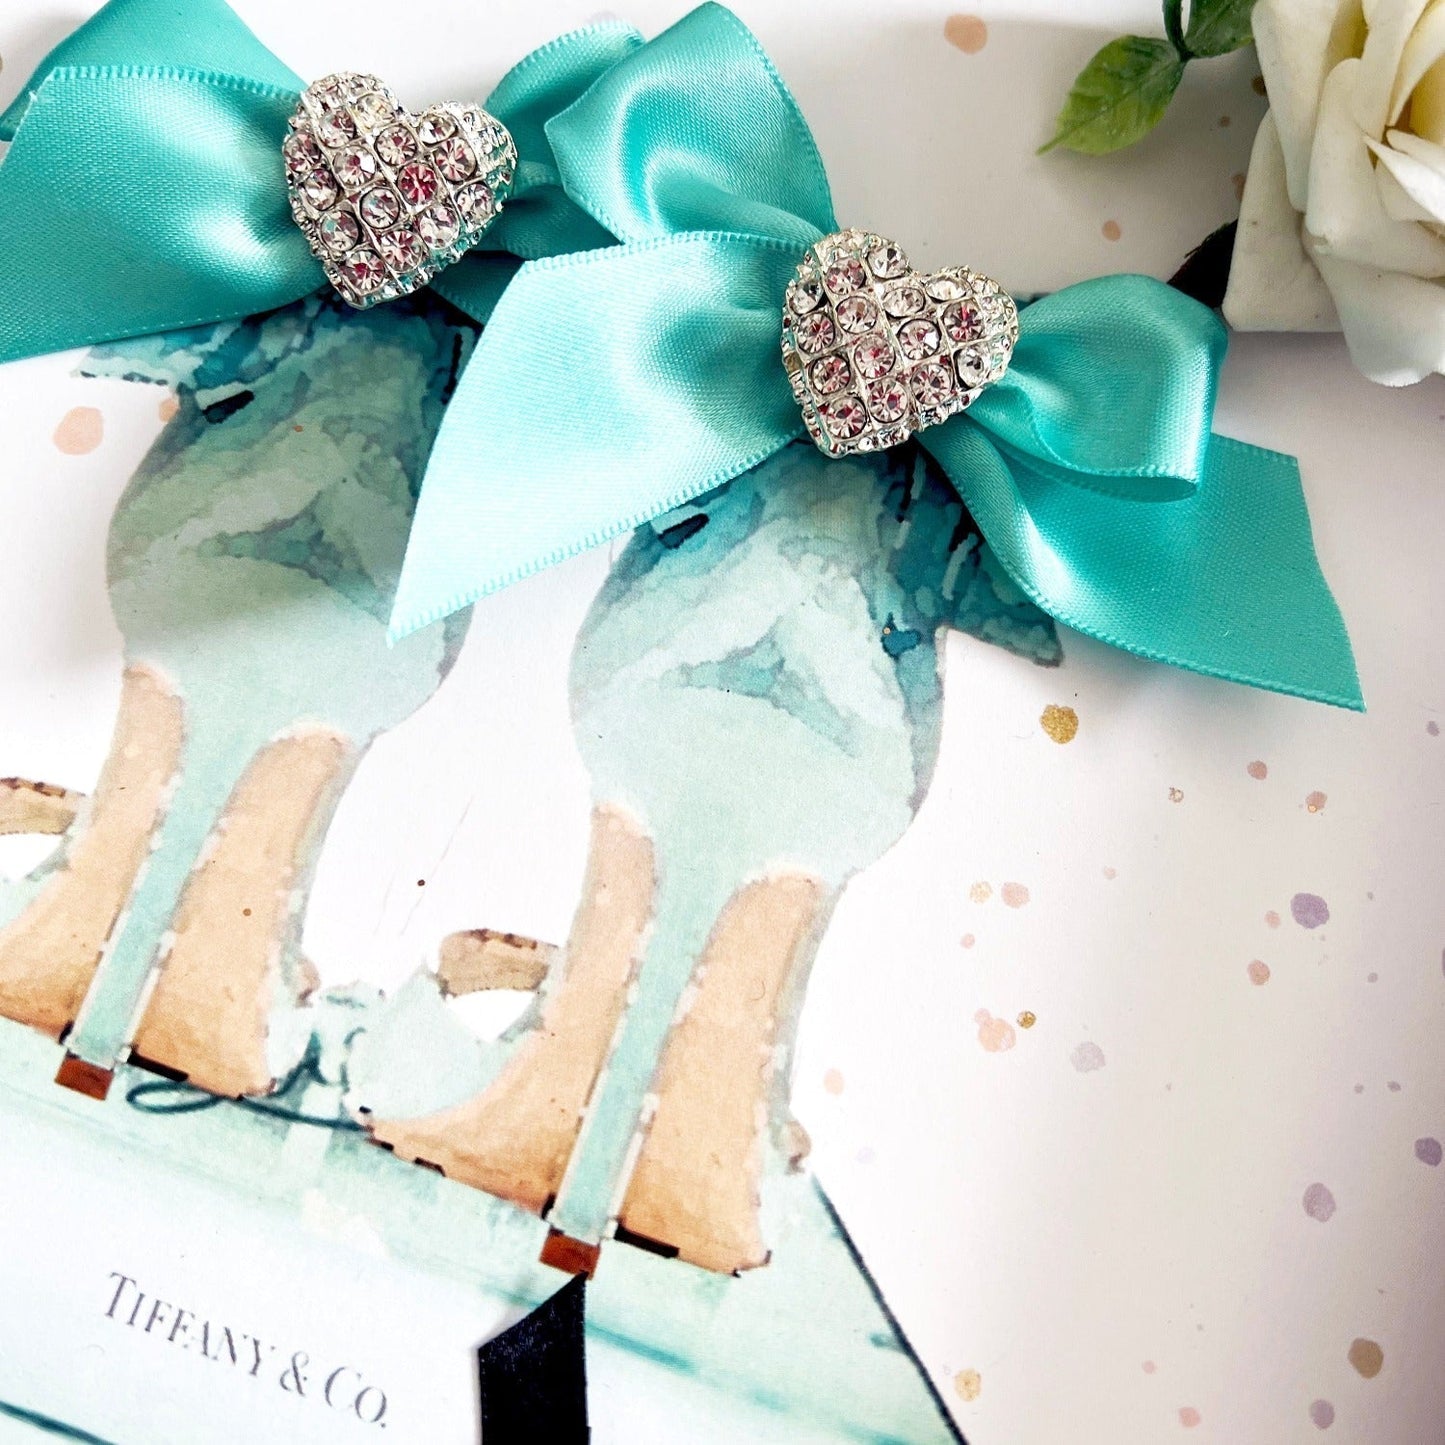 Luxury Stylish wife birthday card handmade with blue ribbon and audrey hepburn print